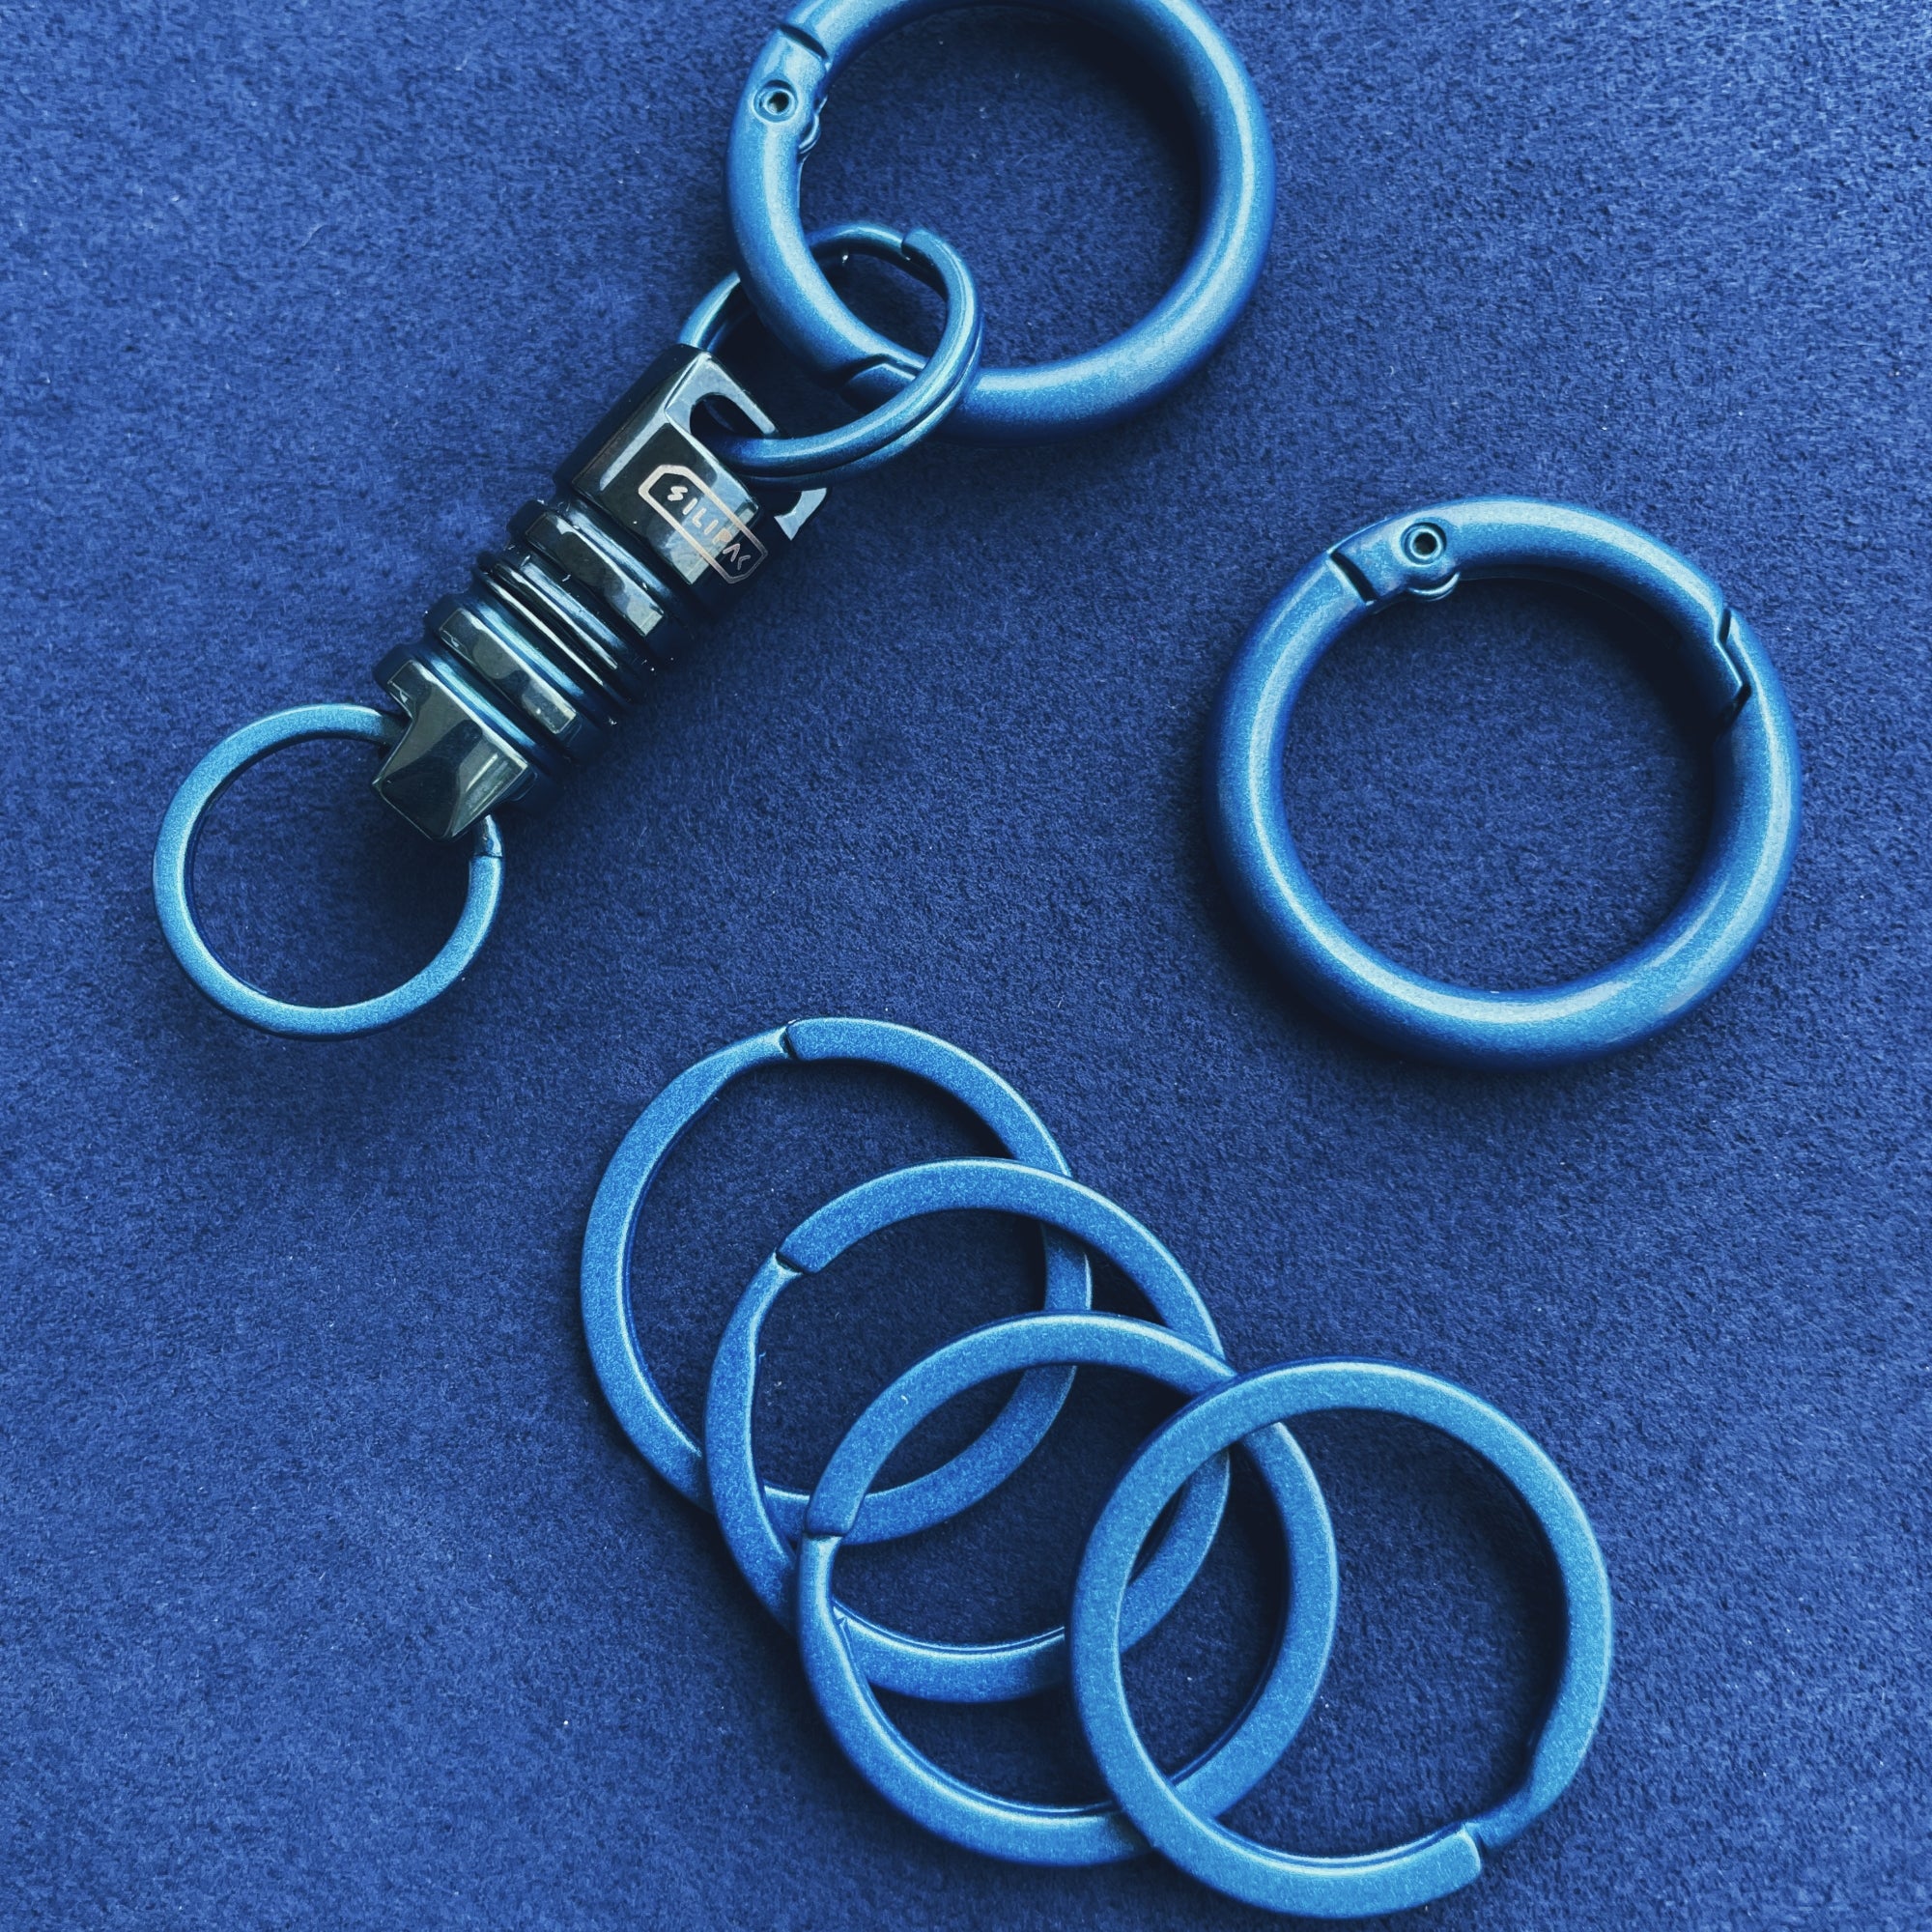 0.8" METAL SPLIT KEY RINGS PVD COATED(12PCS, NAVY BLUE COLOR)